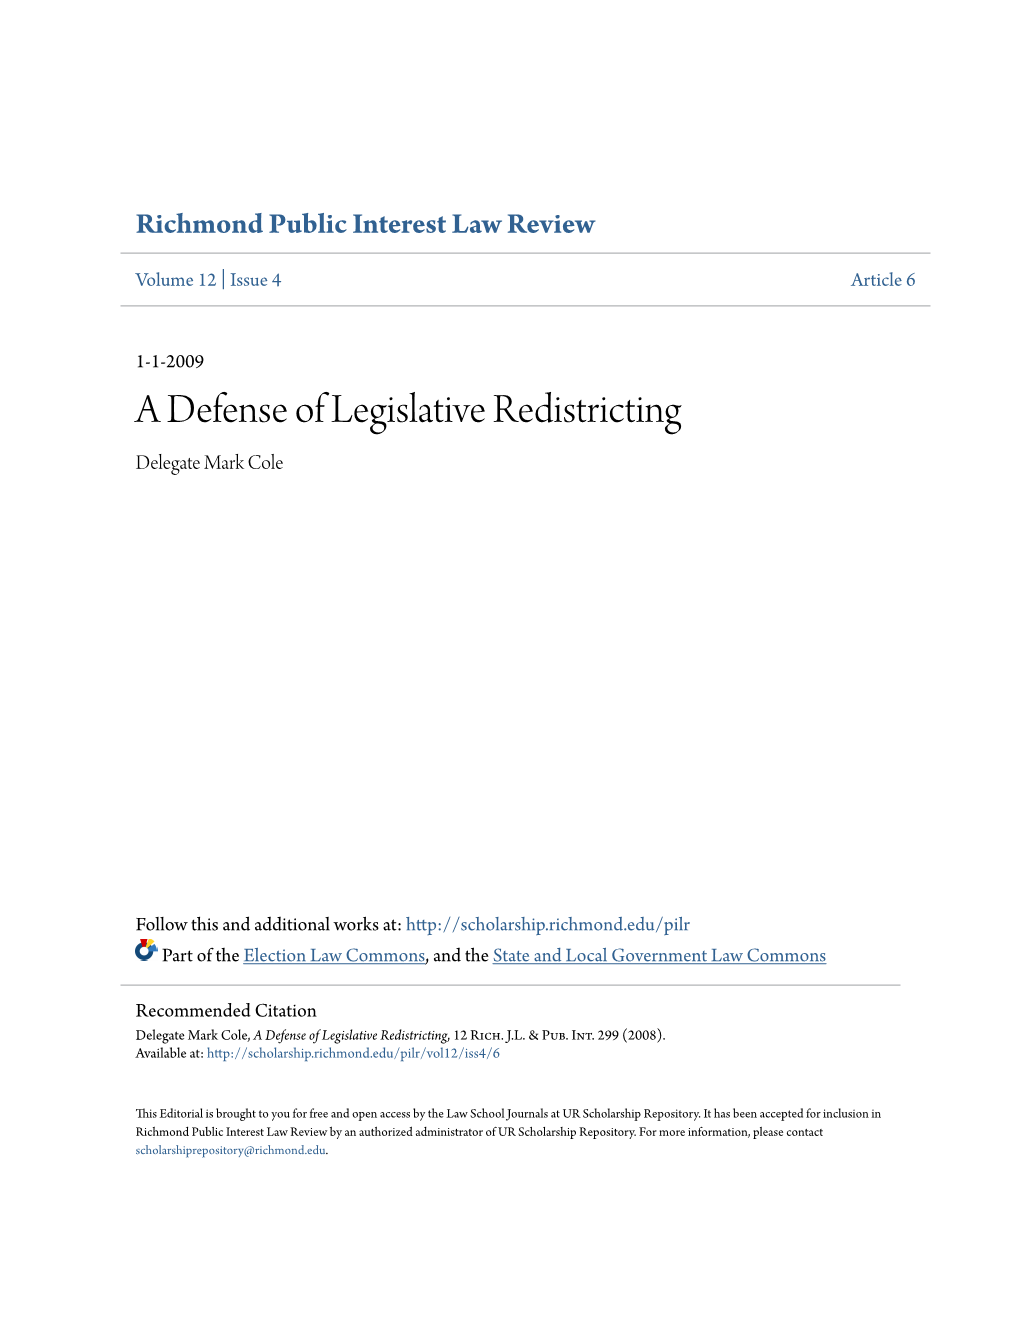 A Defense of Legislative Redistricting Delegate Mark Cole